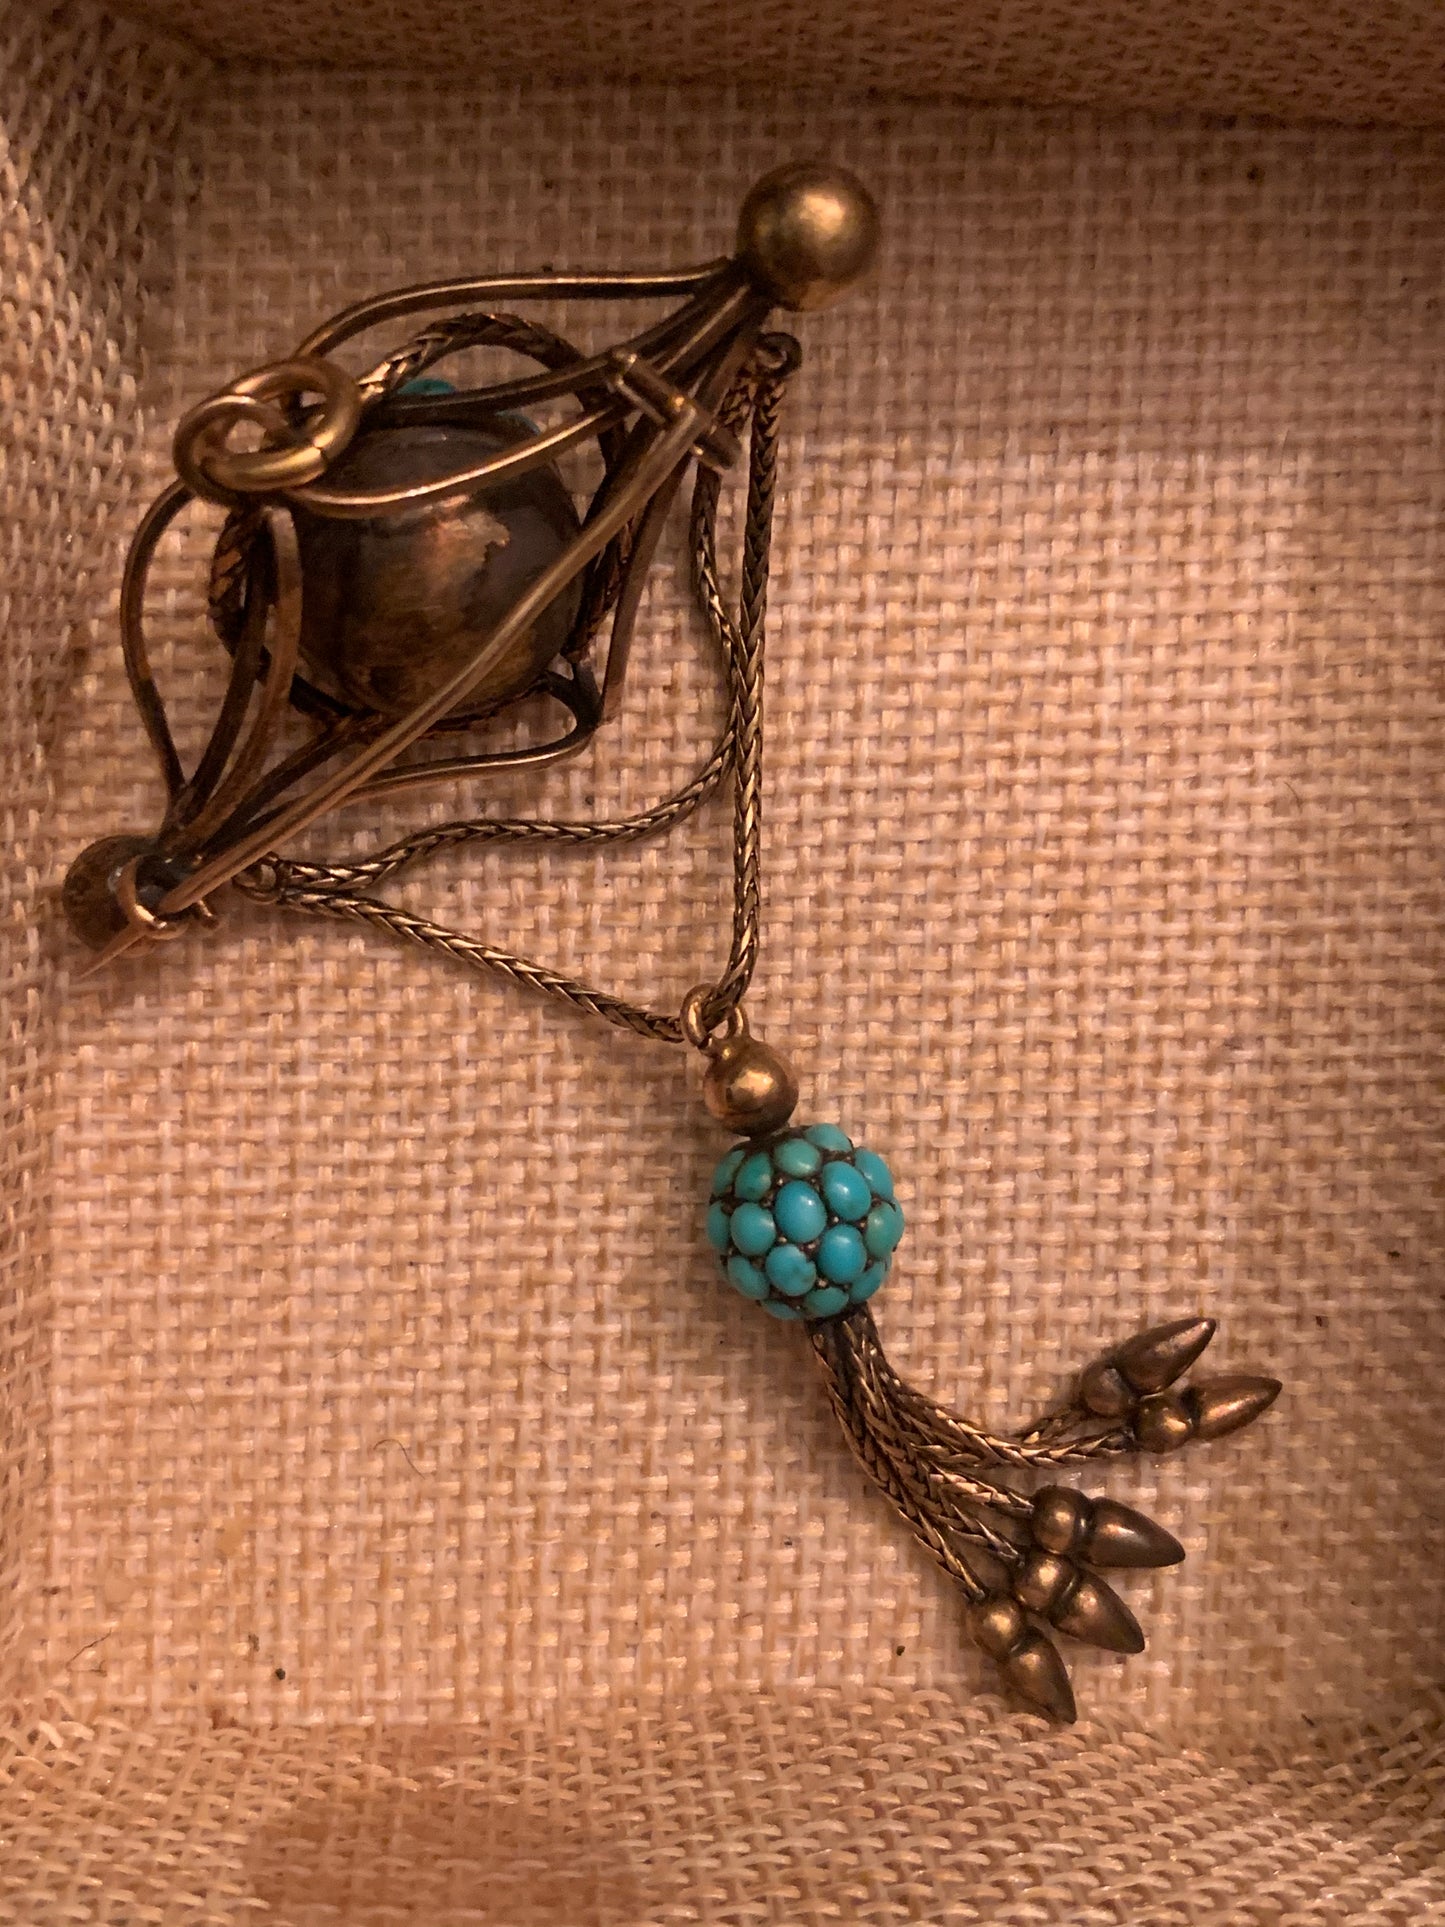 Vintage turquoise brooch